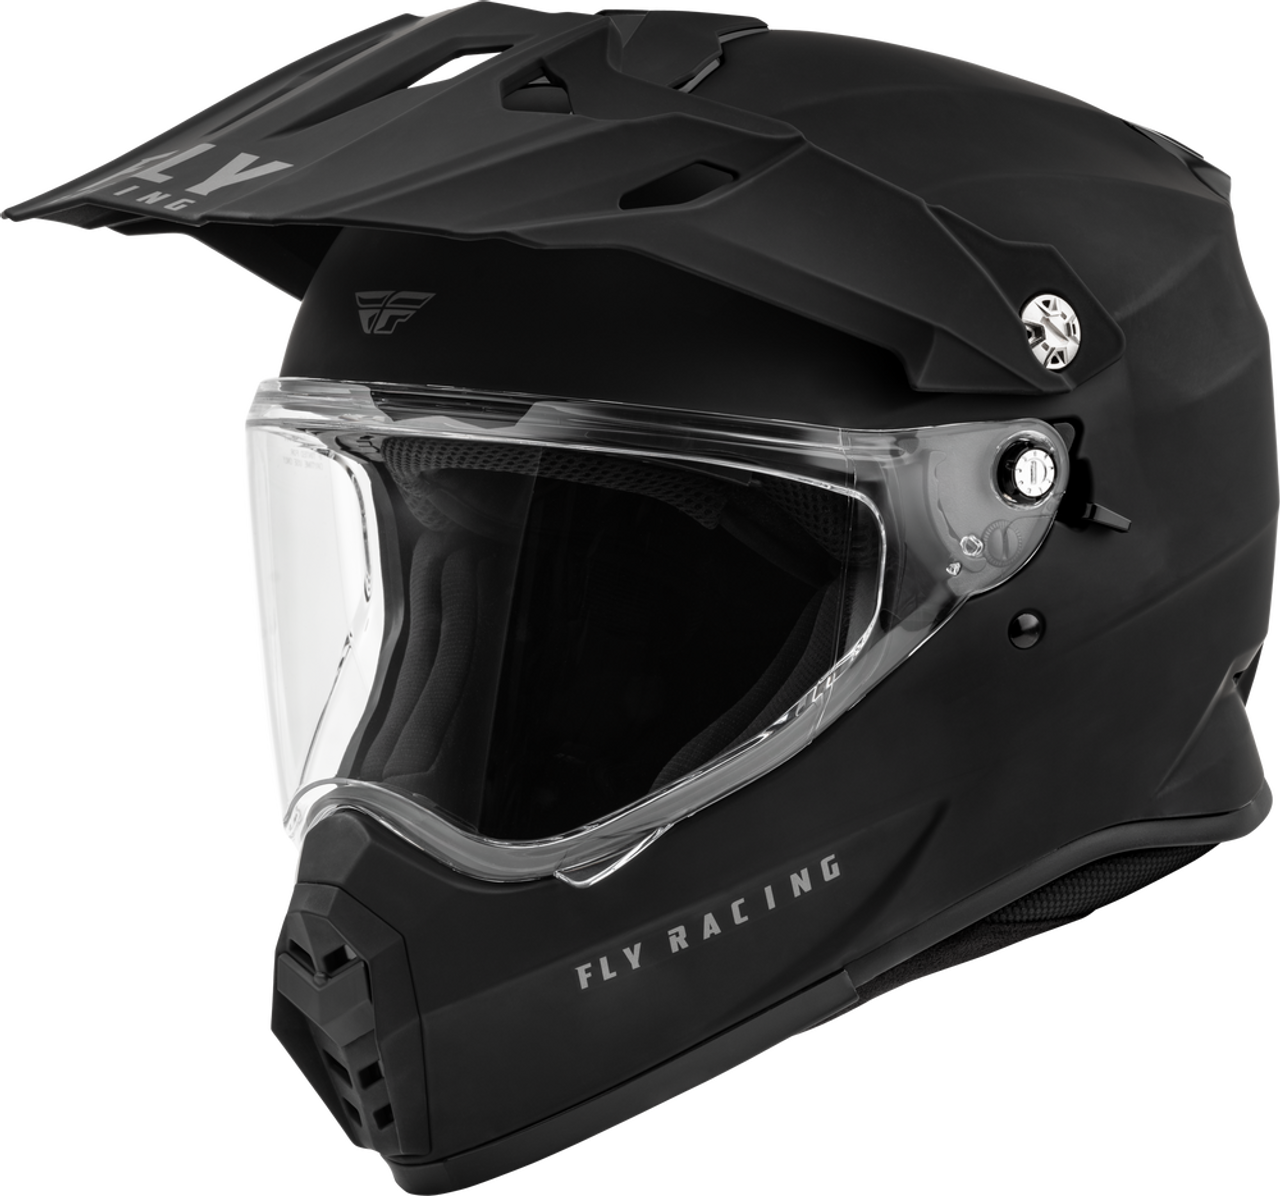 Fly Racing Solid Helmets